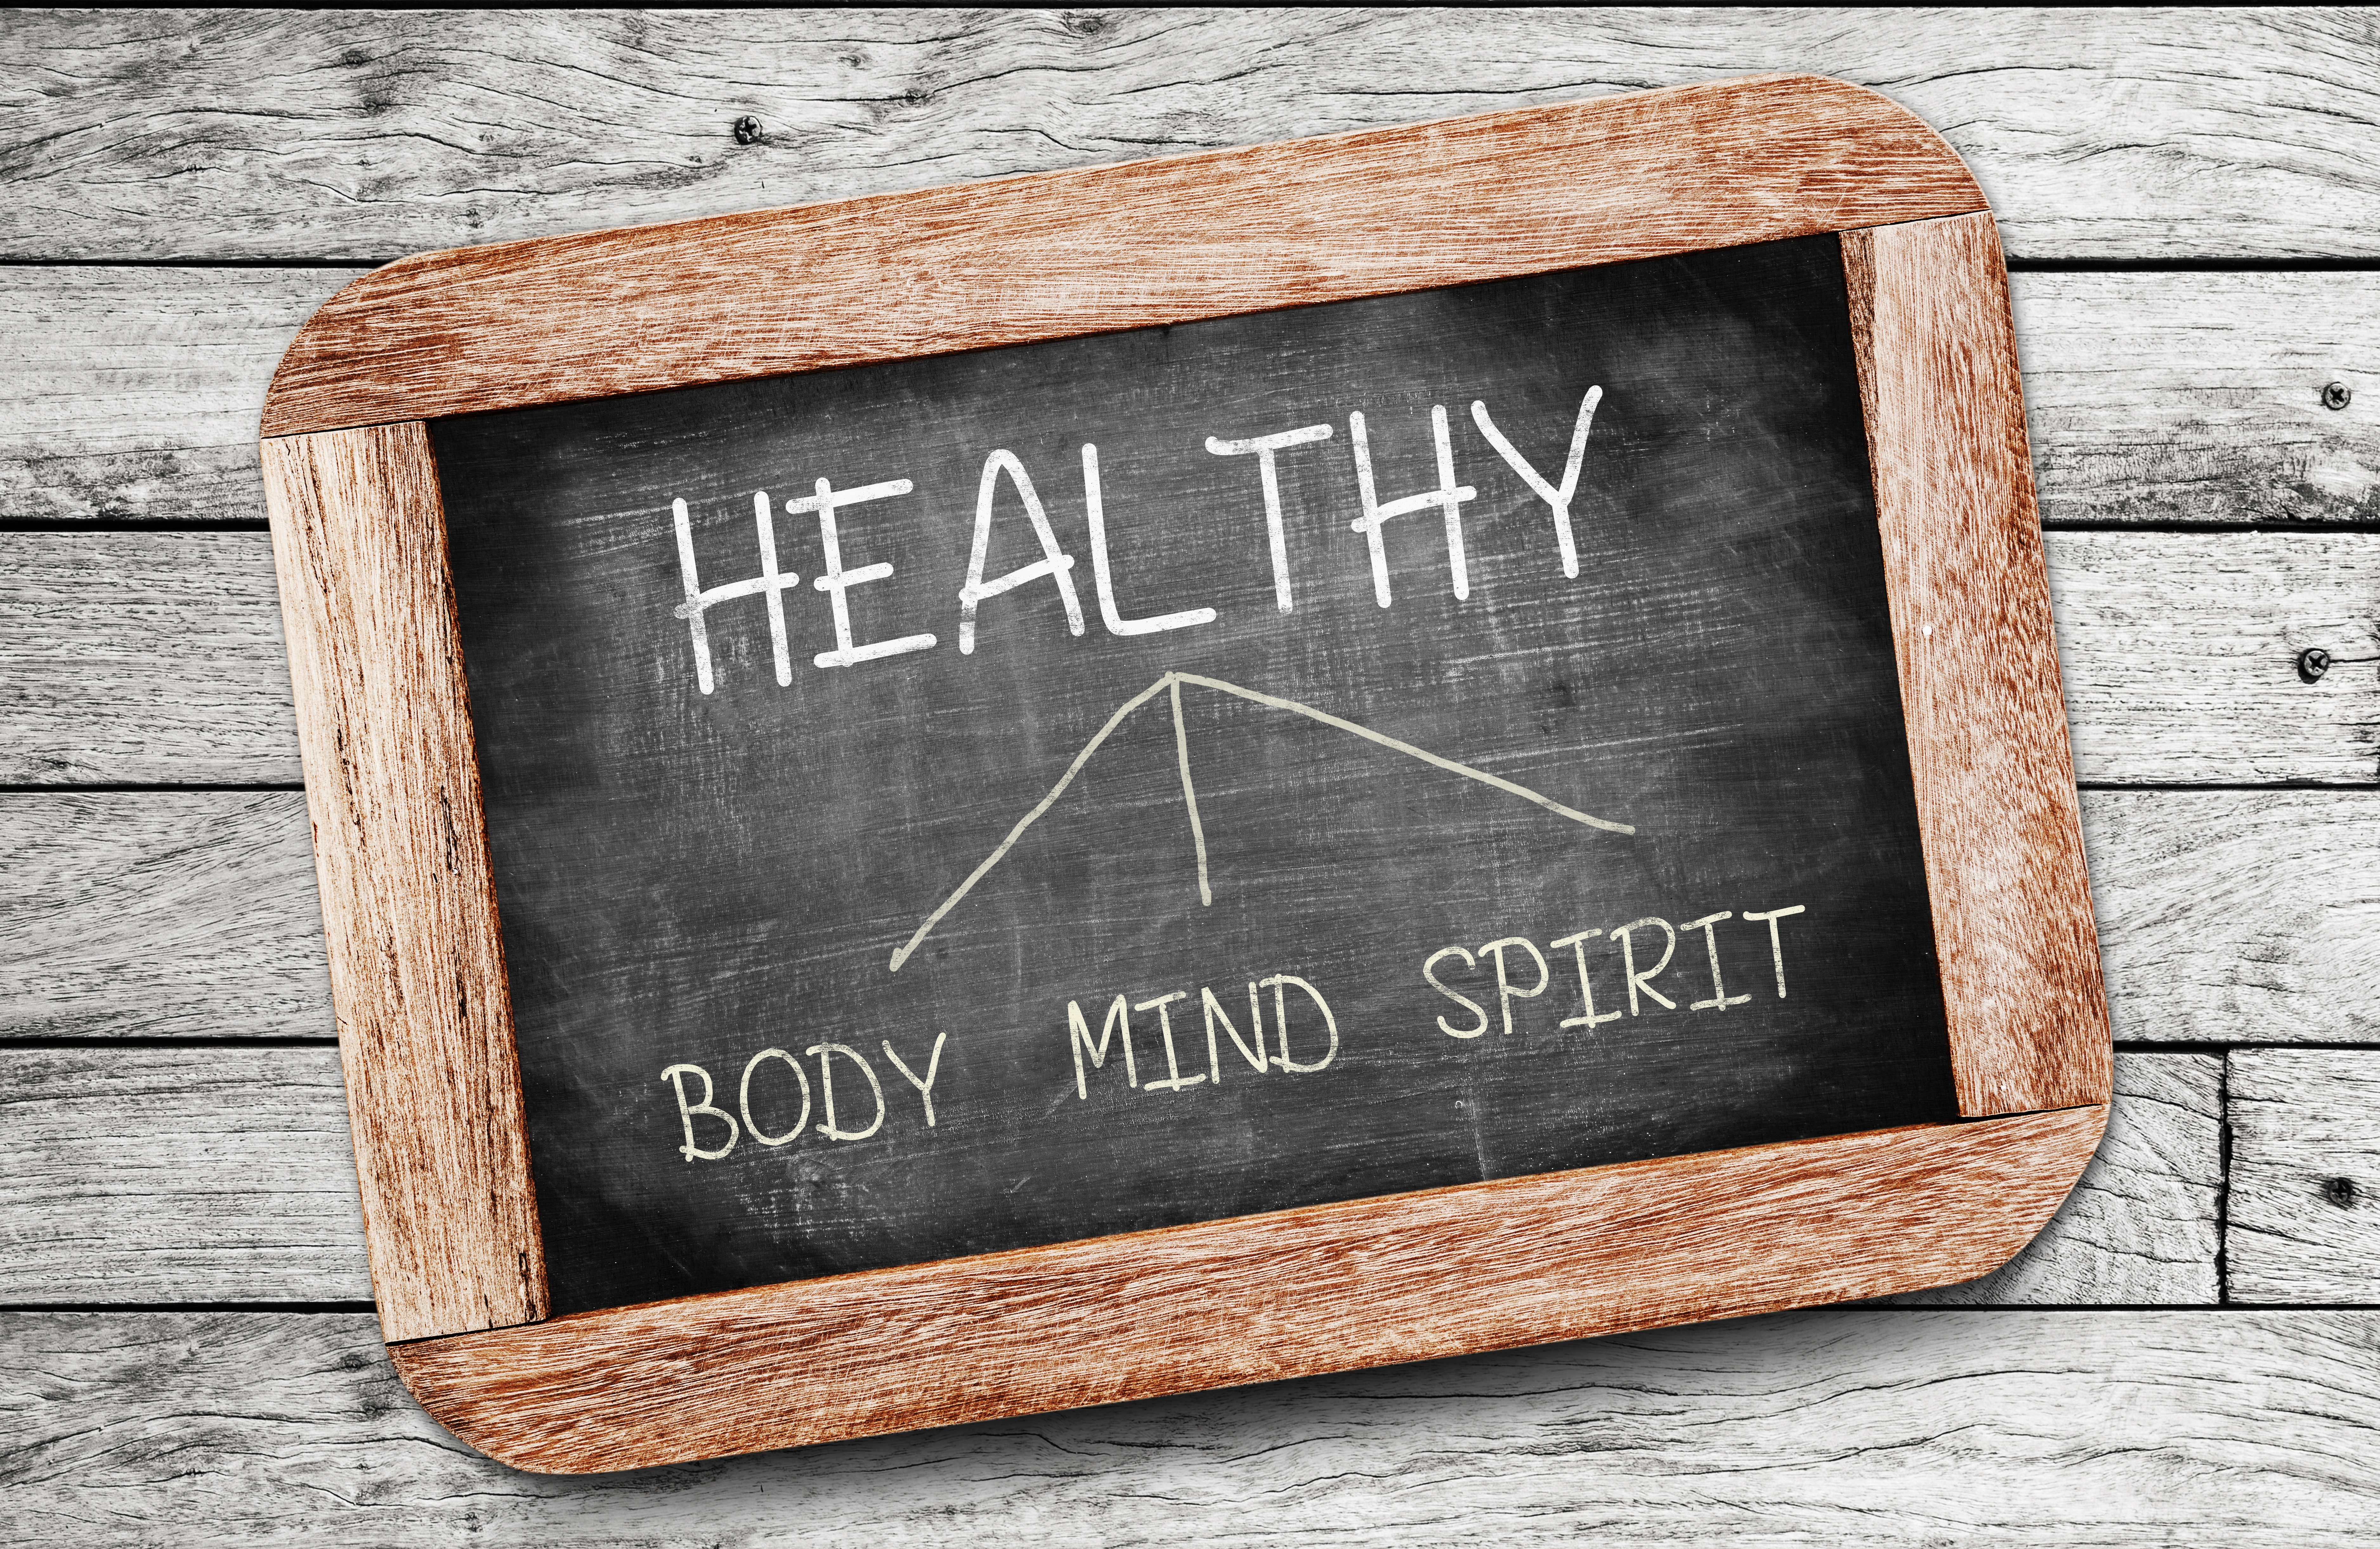 Healthy, body, mind & spirit written on a chalk board